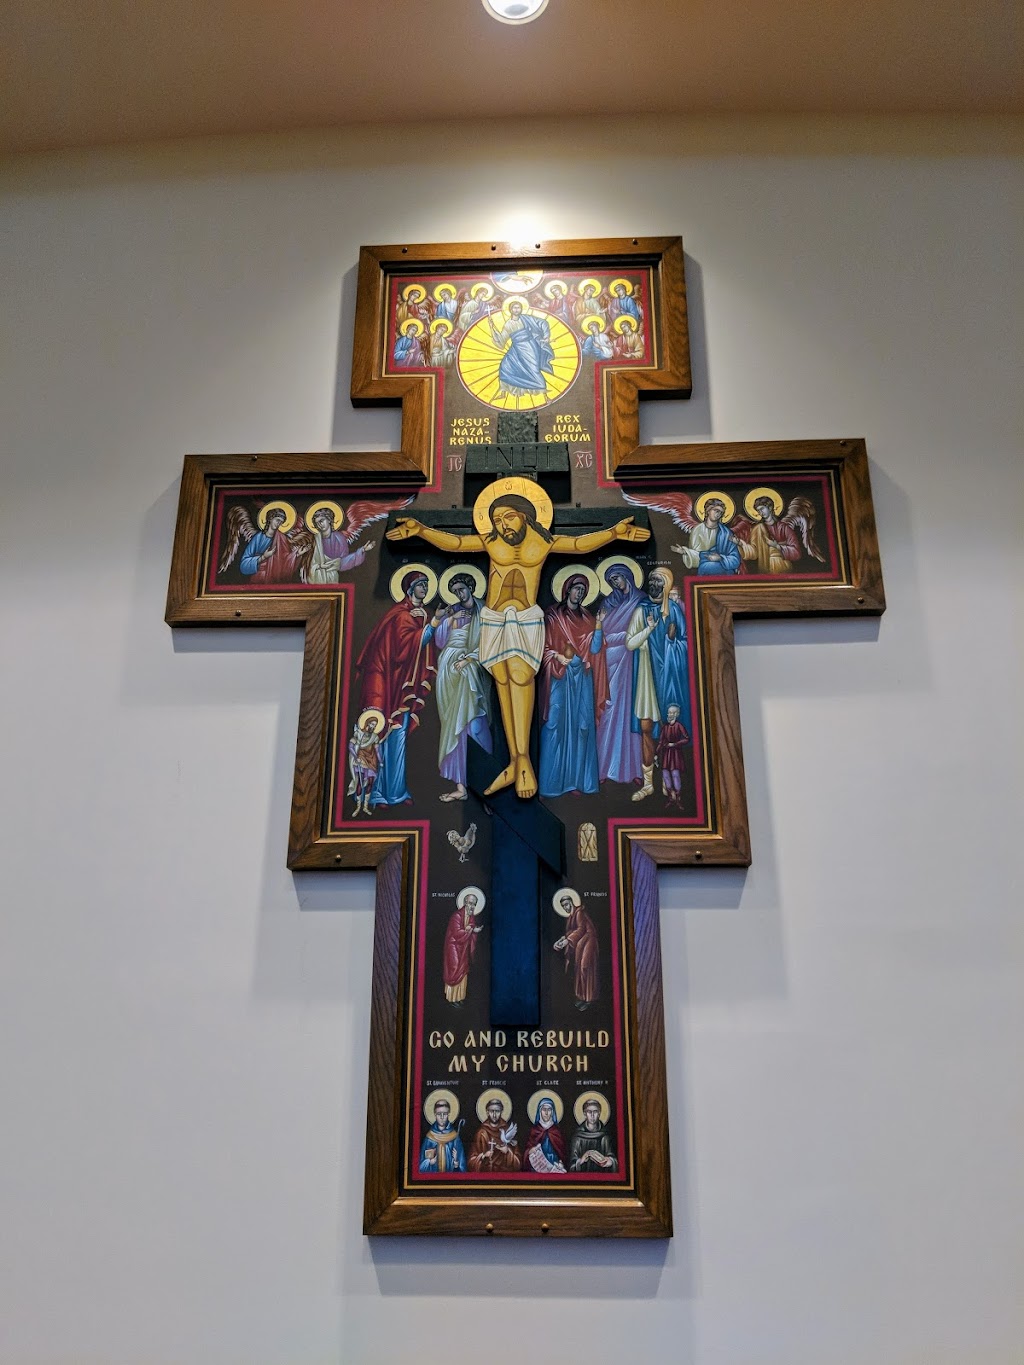 St Nicholas Byzantine Catholic Church | 13 Pembroke Rd, Danbury, CT 06811 | Phone: (203) 743-1106